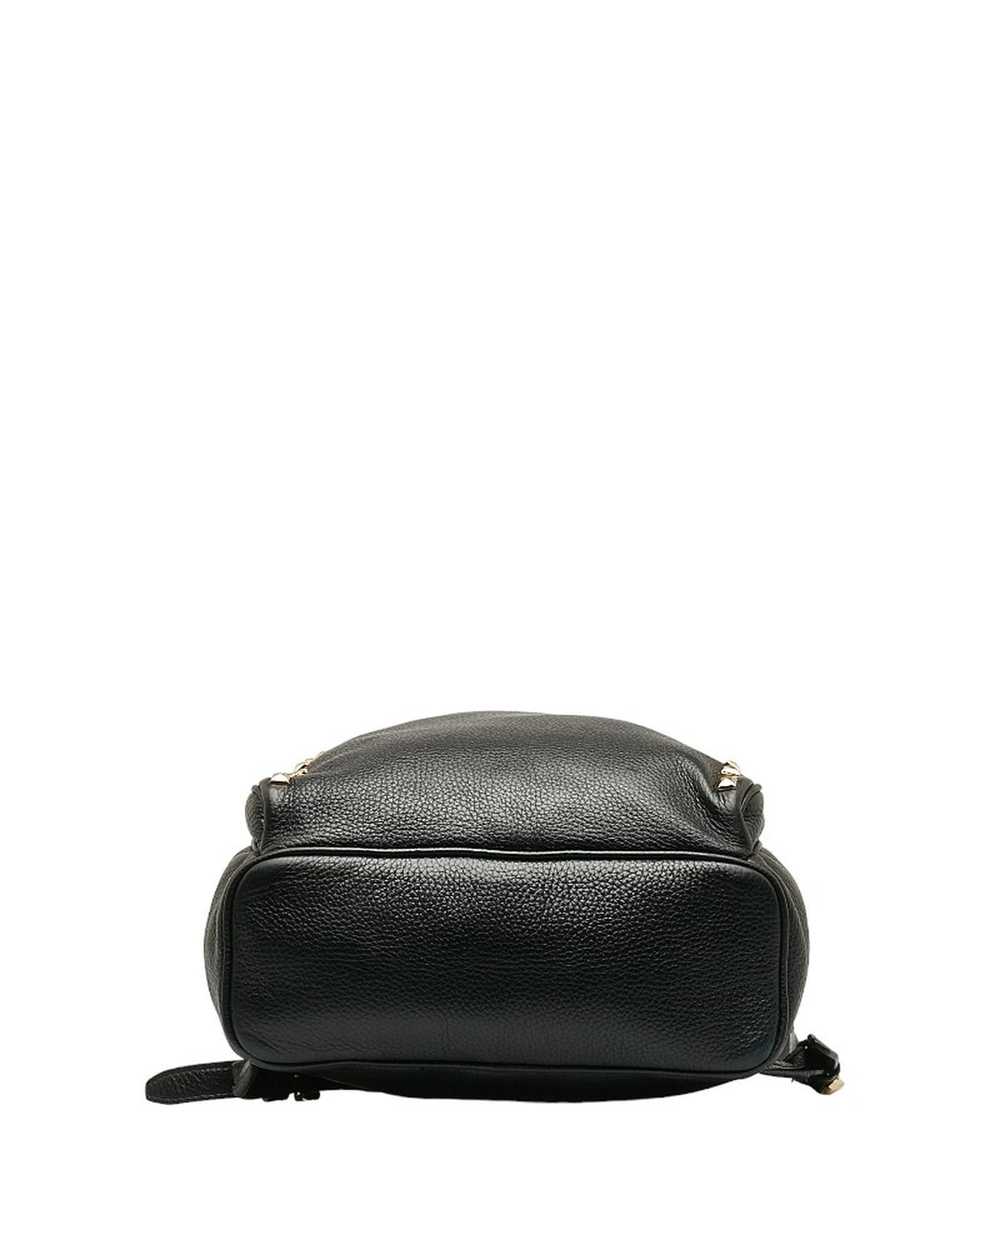 Michael Kors Studded Leather Abbey Backpack Bag - image 4